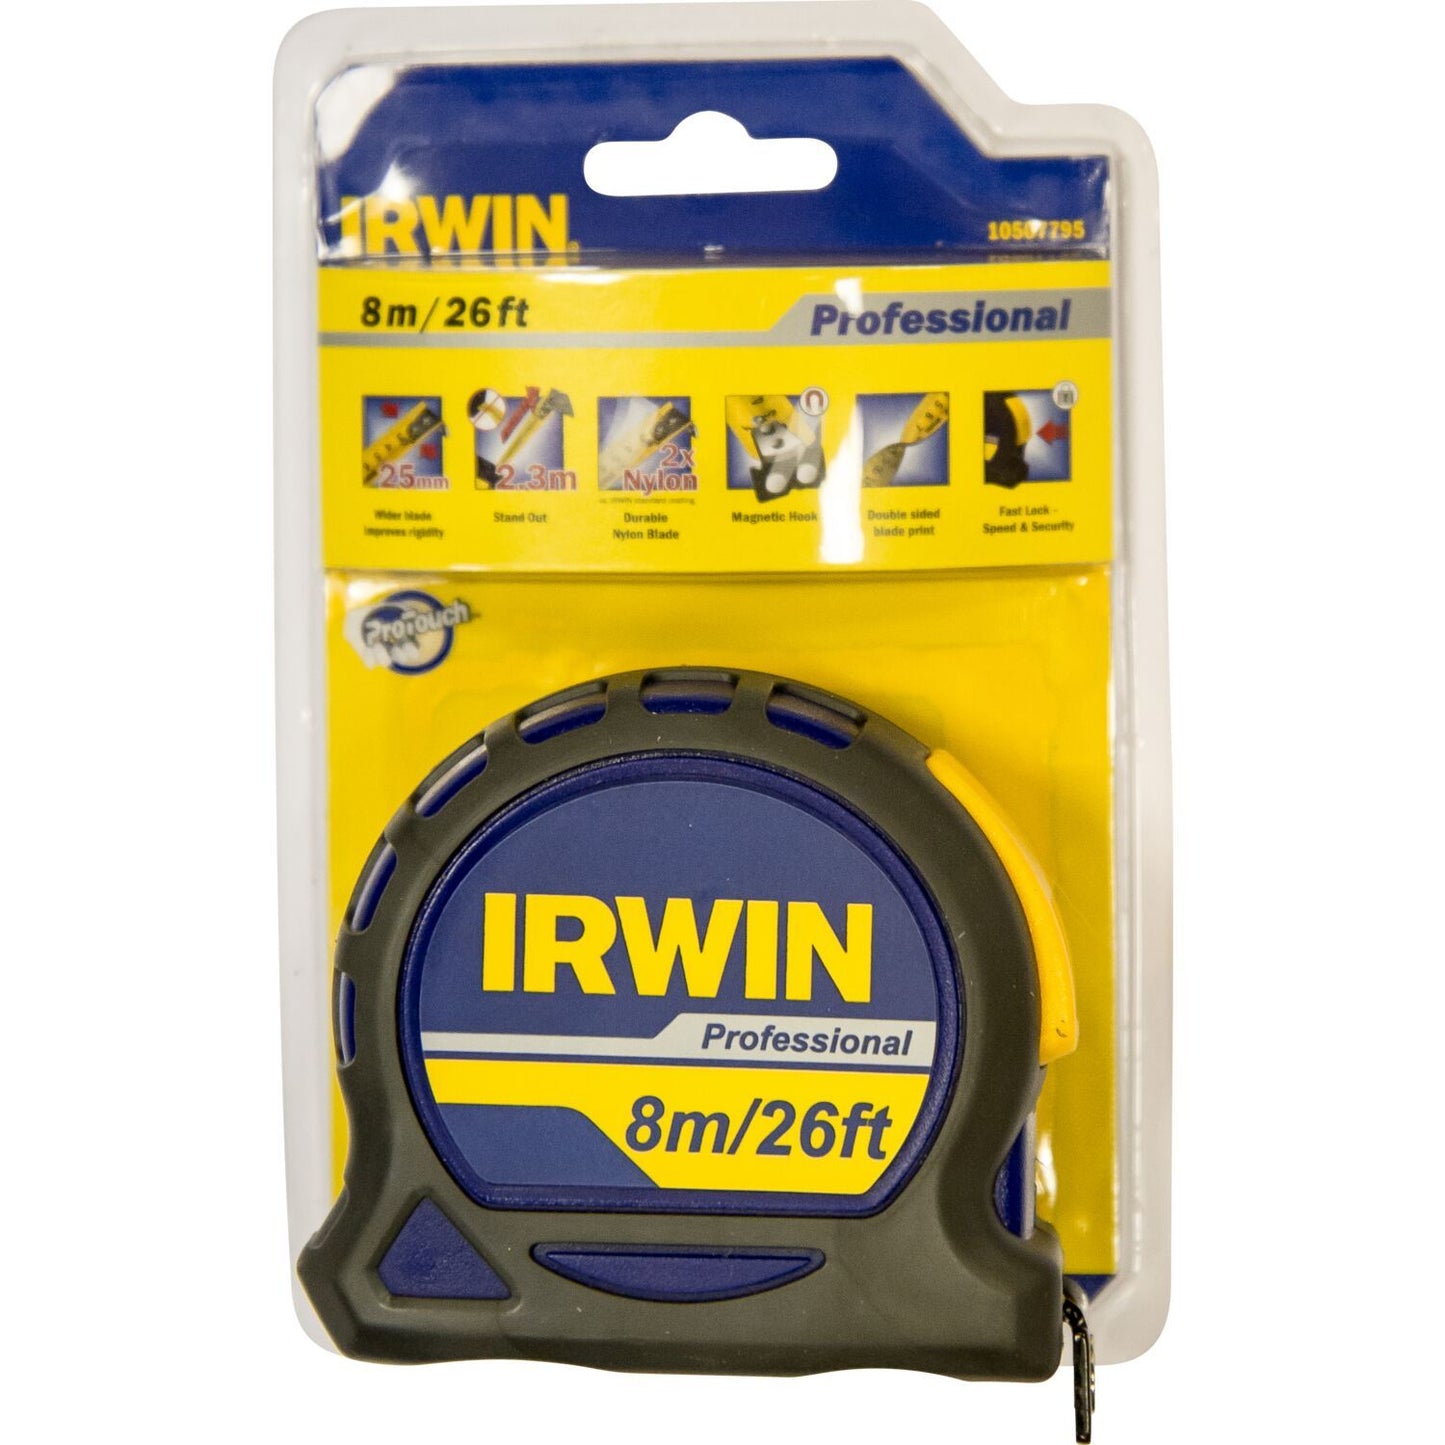 Irwin Professioneel 8m/24"" rolmeter - 10507795